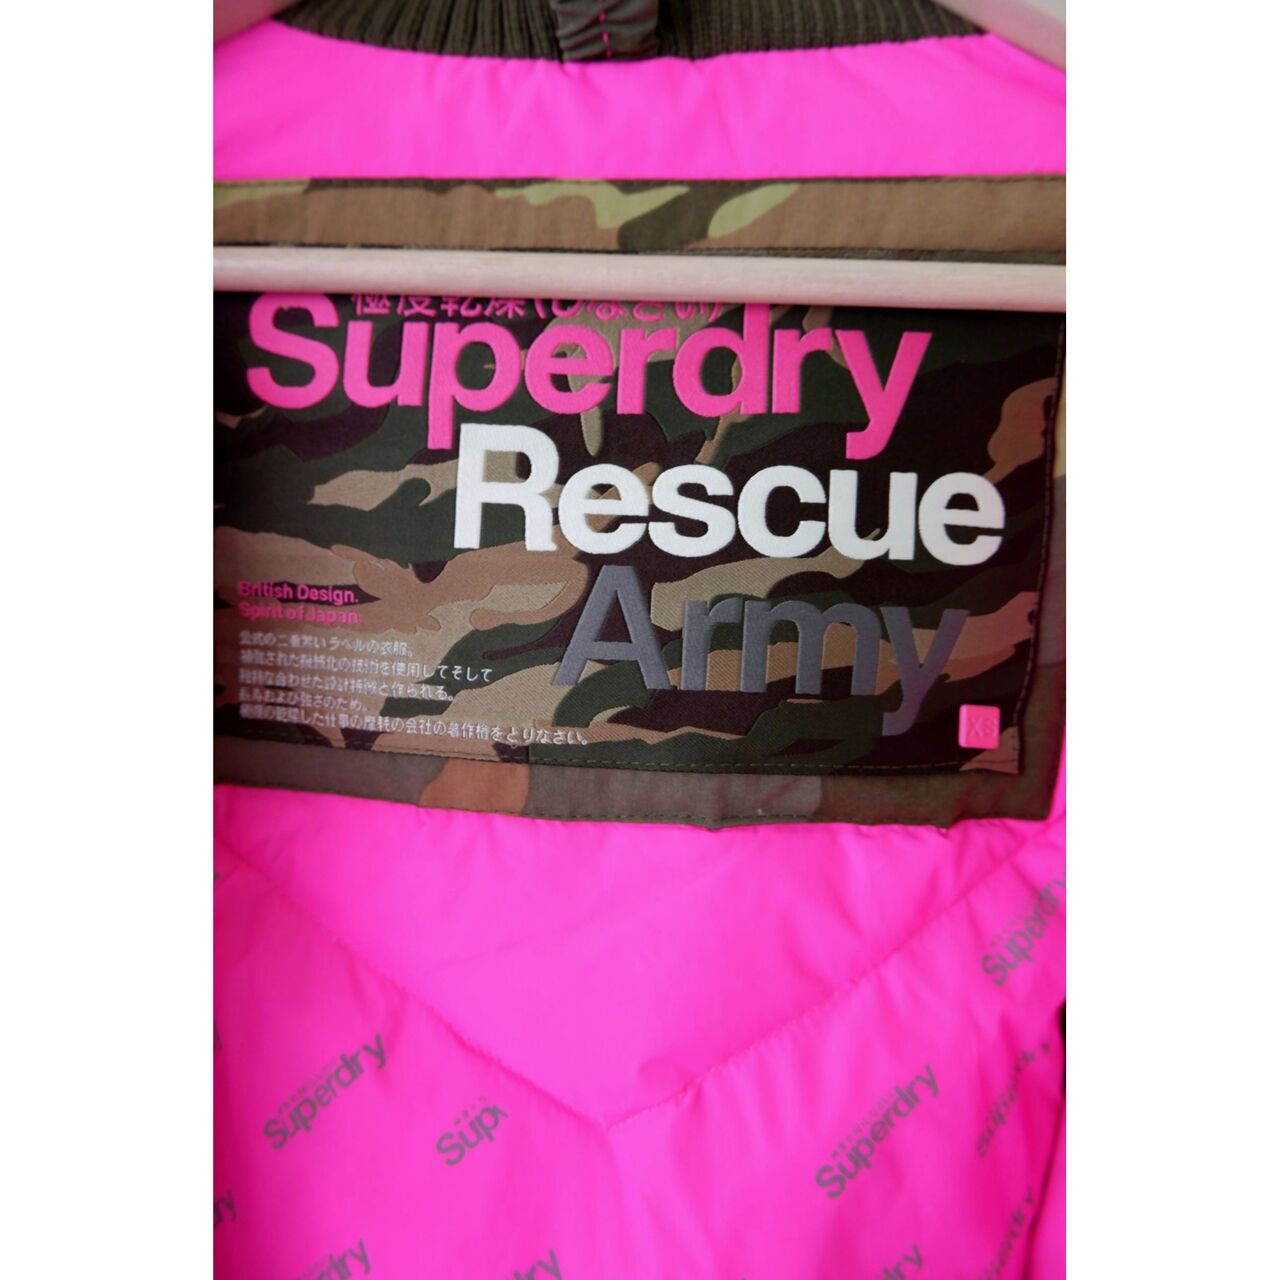 Superdry Army Jacket